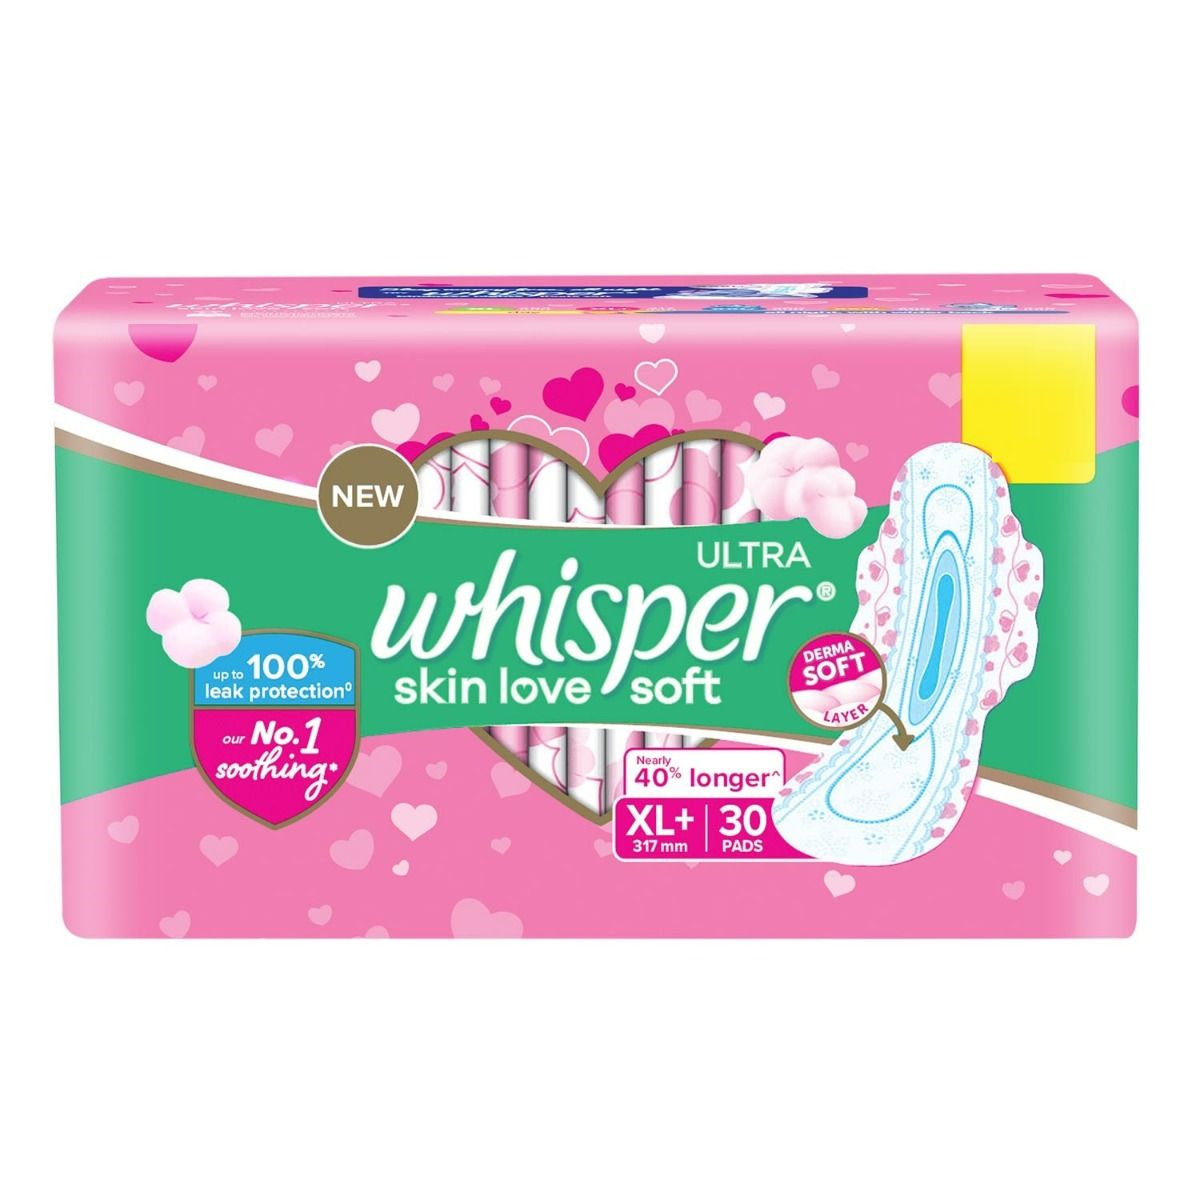 Buy Whisper Ultra Skin Love Soft Sanitary Pads for Women XL+, 30 Count Online